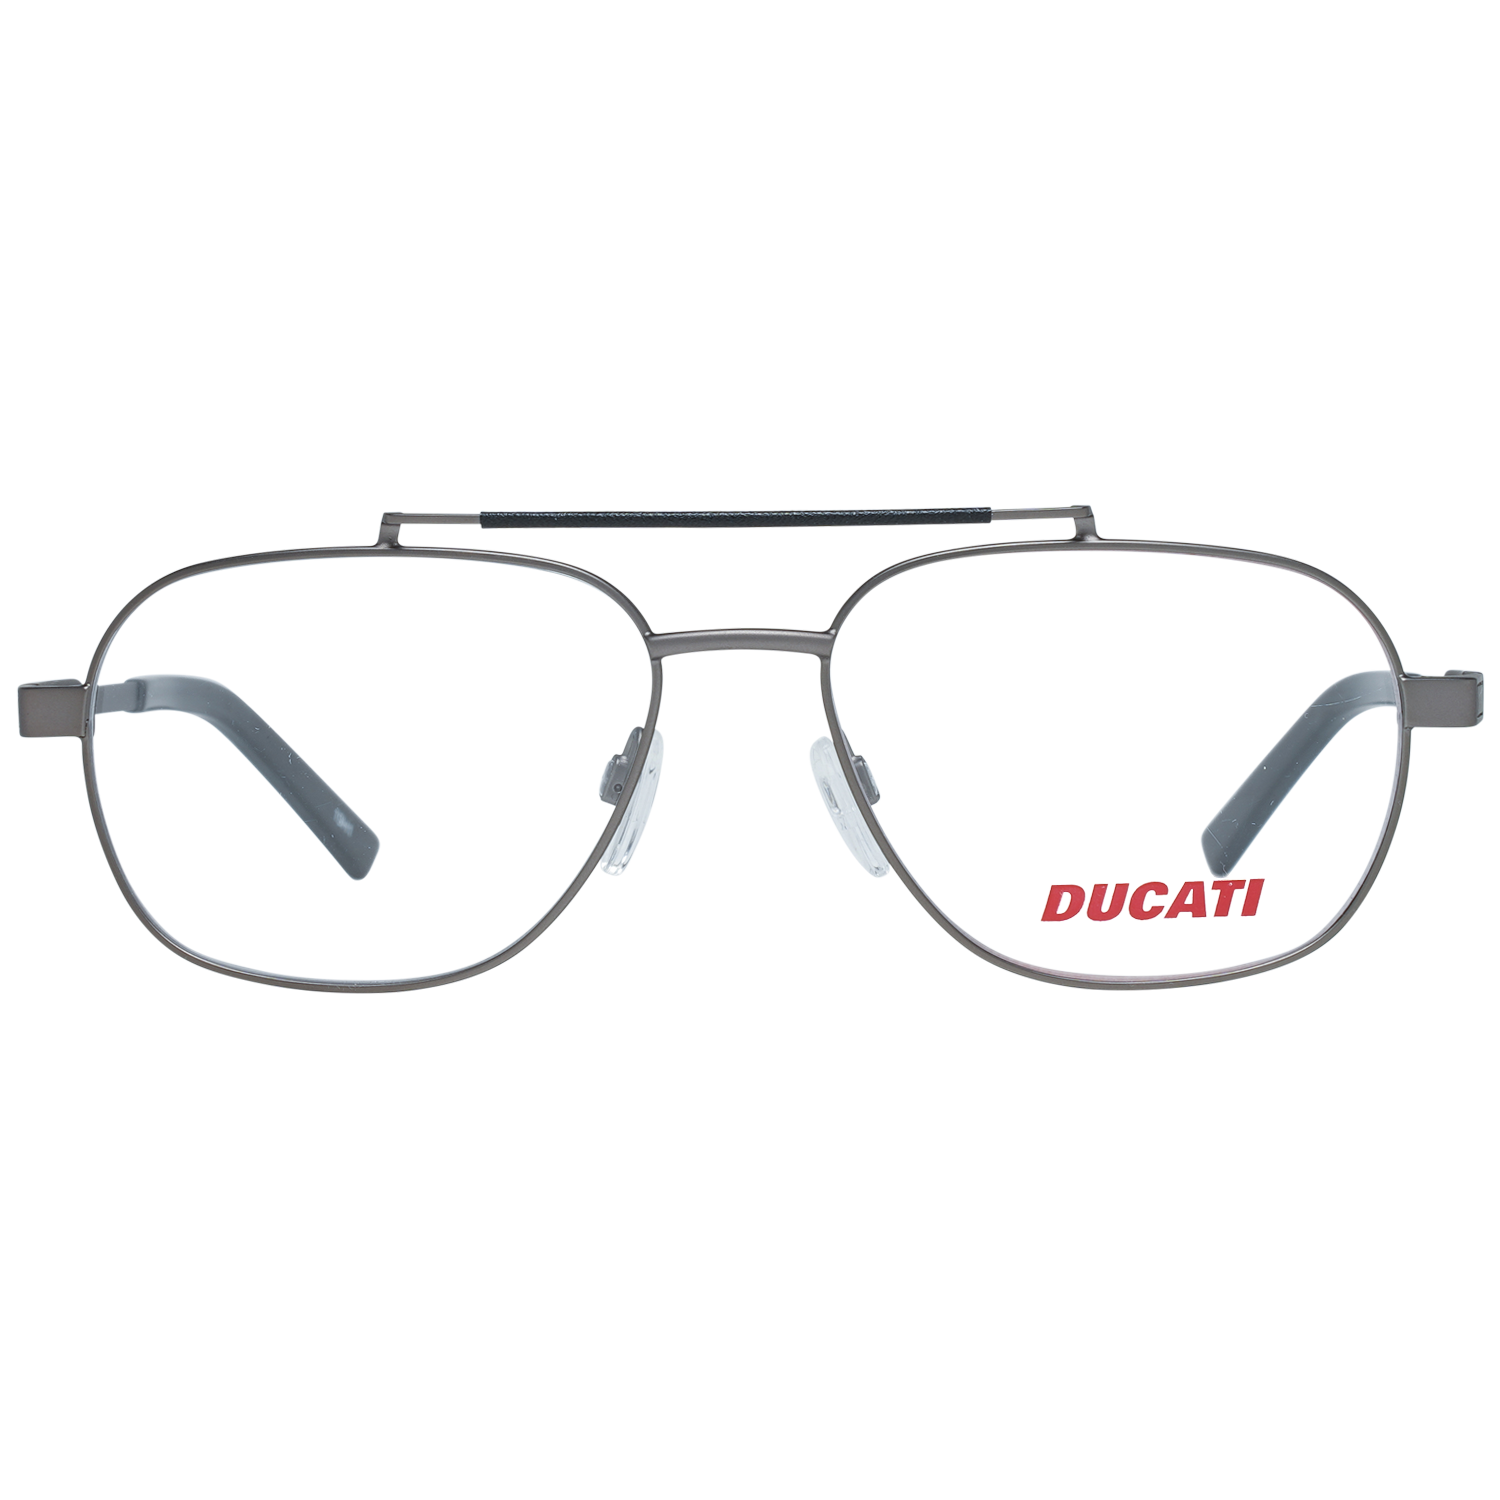 Ducati Frames Ducati Optical Frame DA3018 900 56 Eyeglasses Eyewear UK USA Australia 